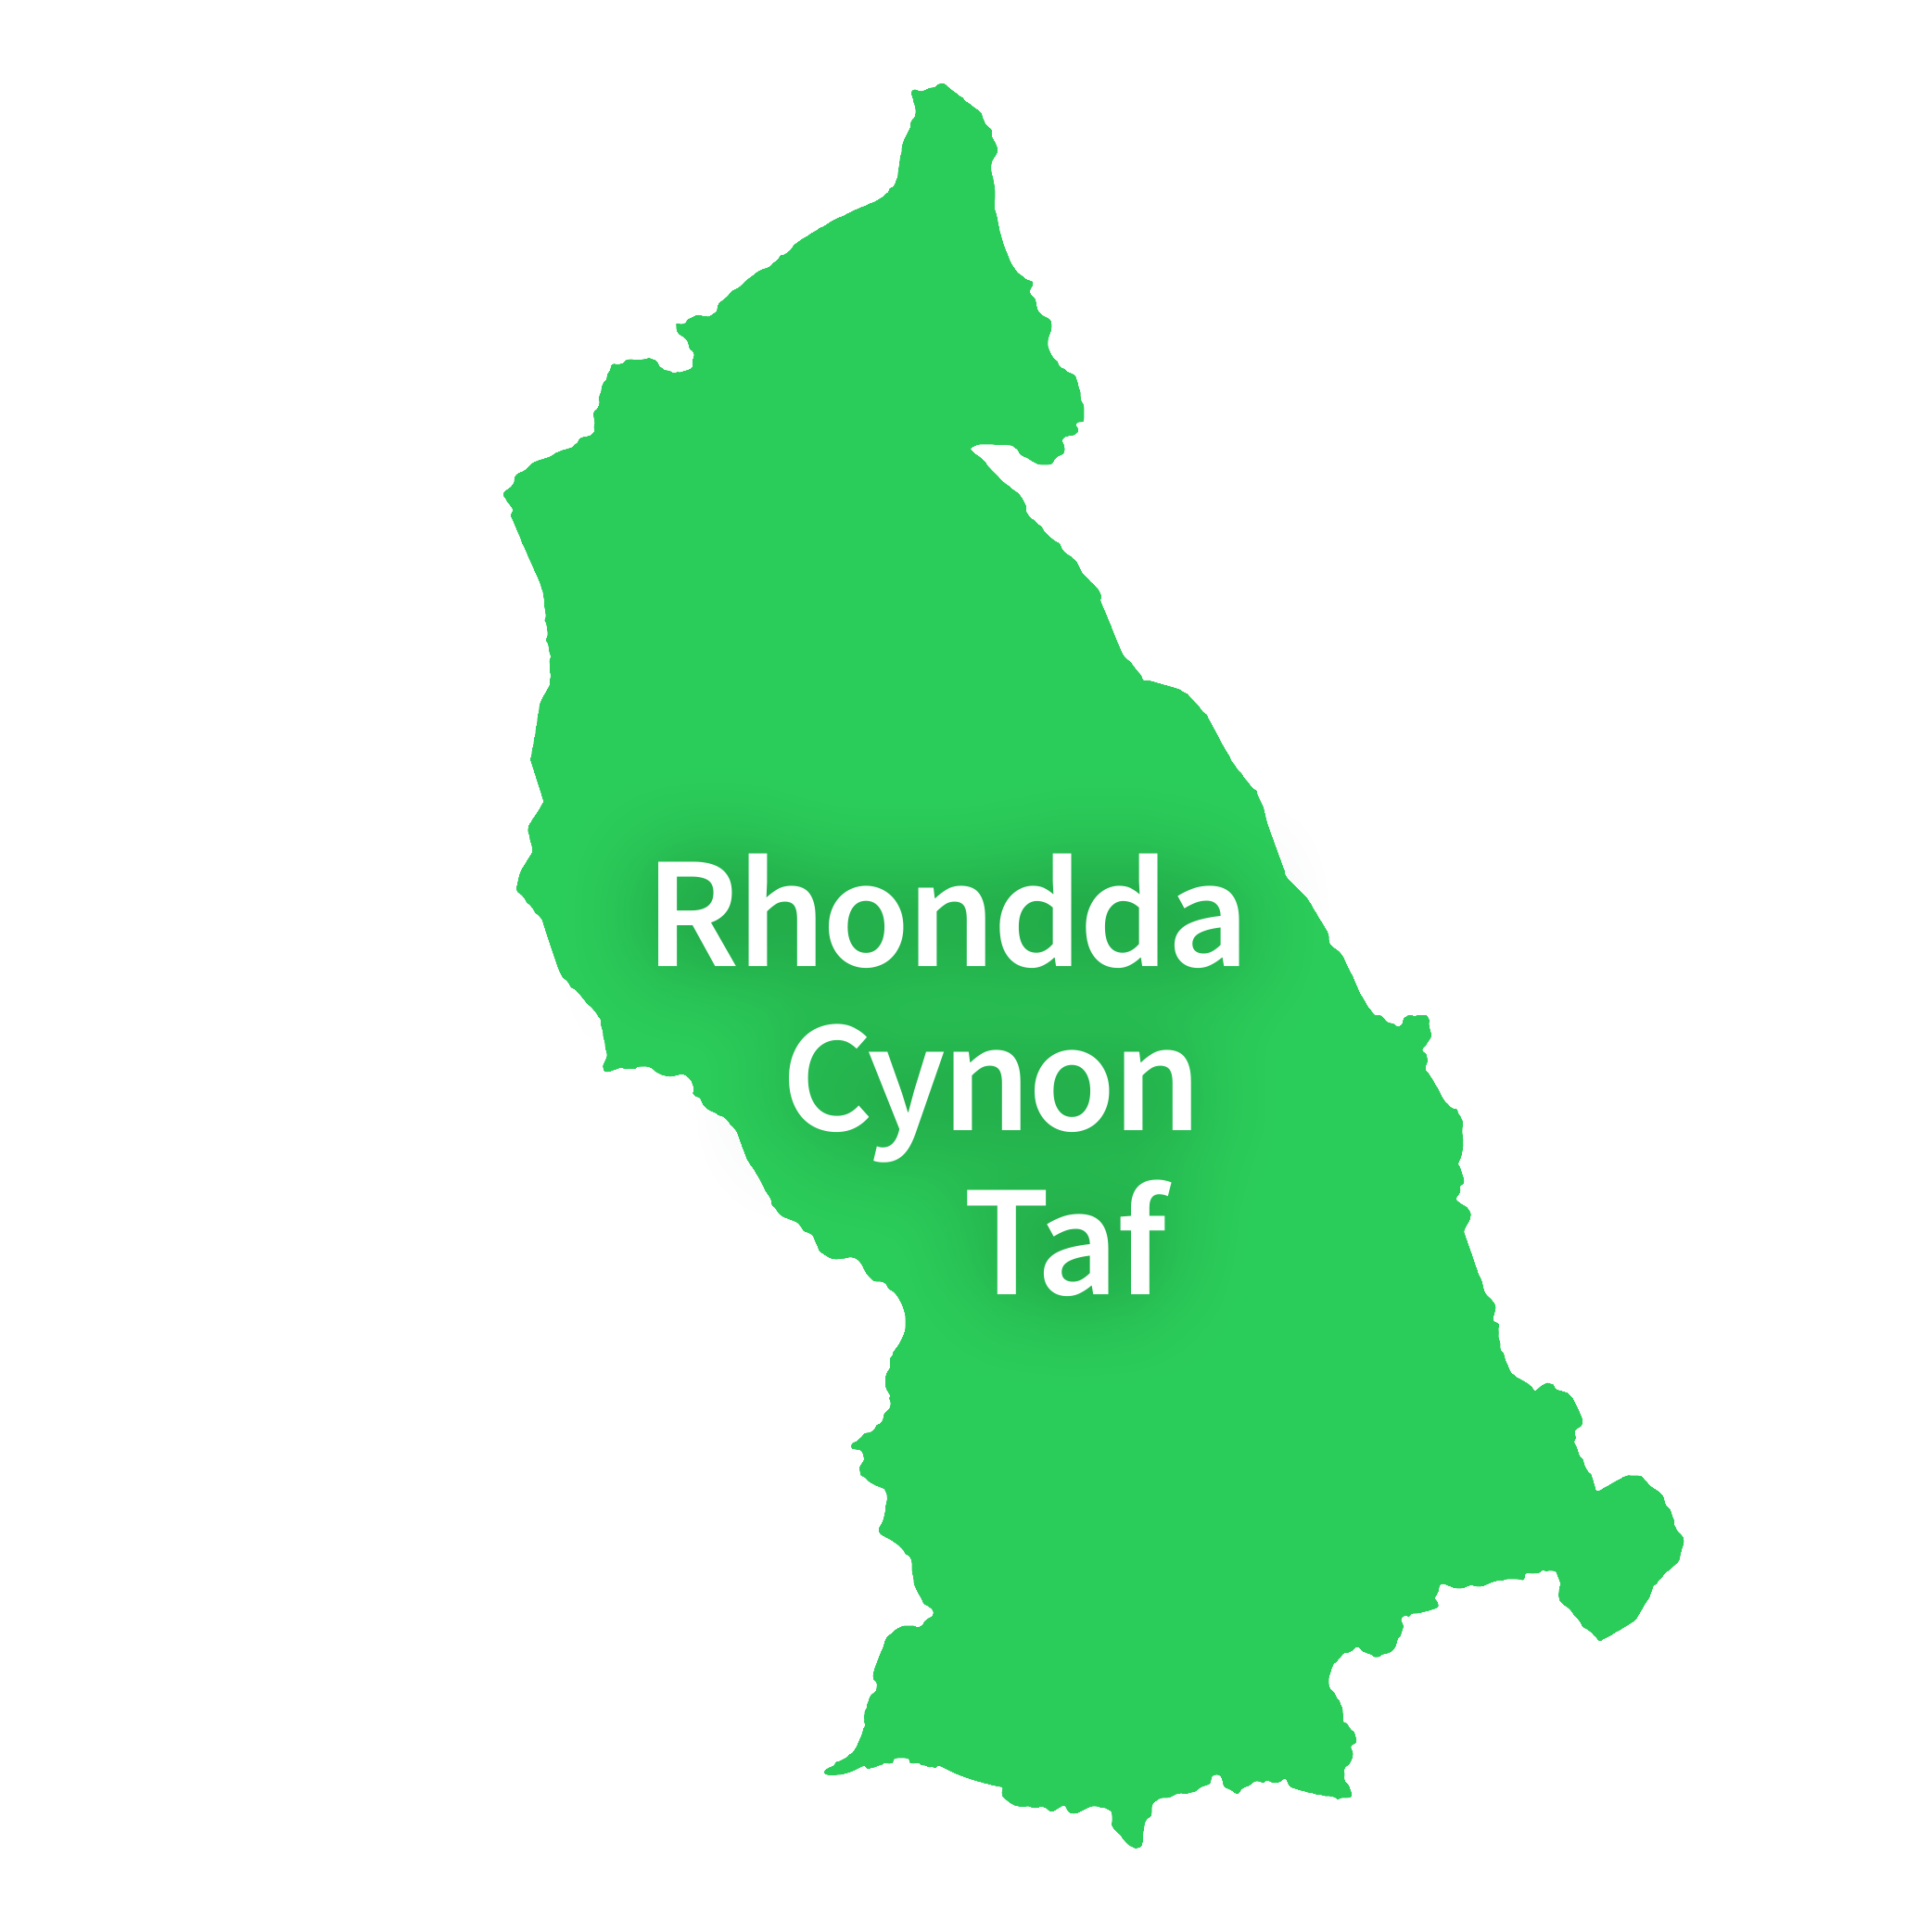 Map of Rhondda Cynon Taf